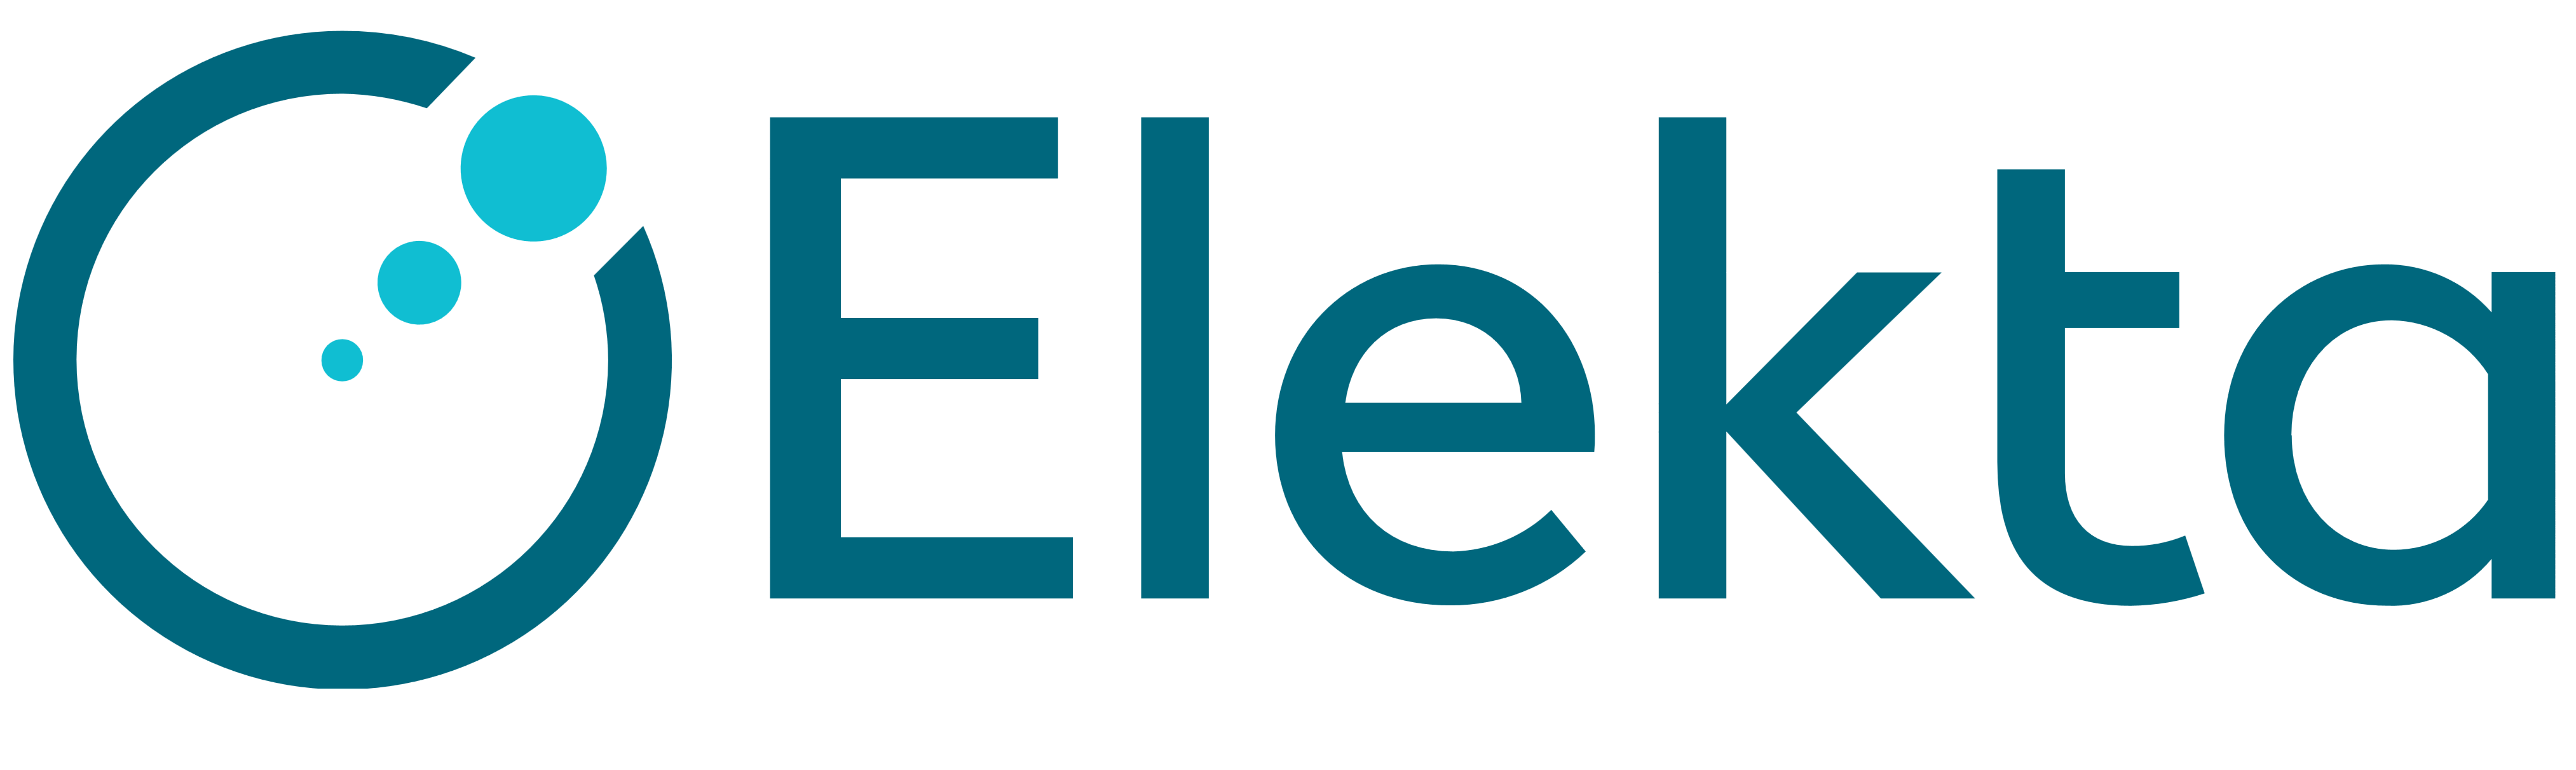 Elekta logo, logotype